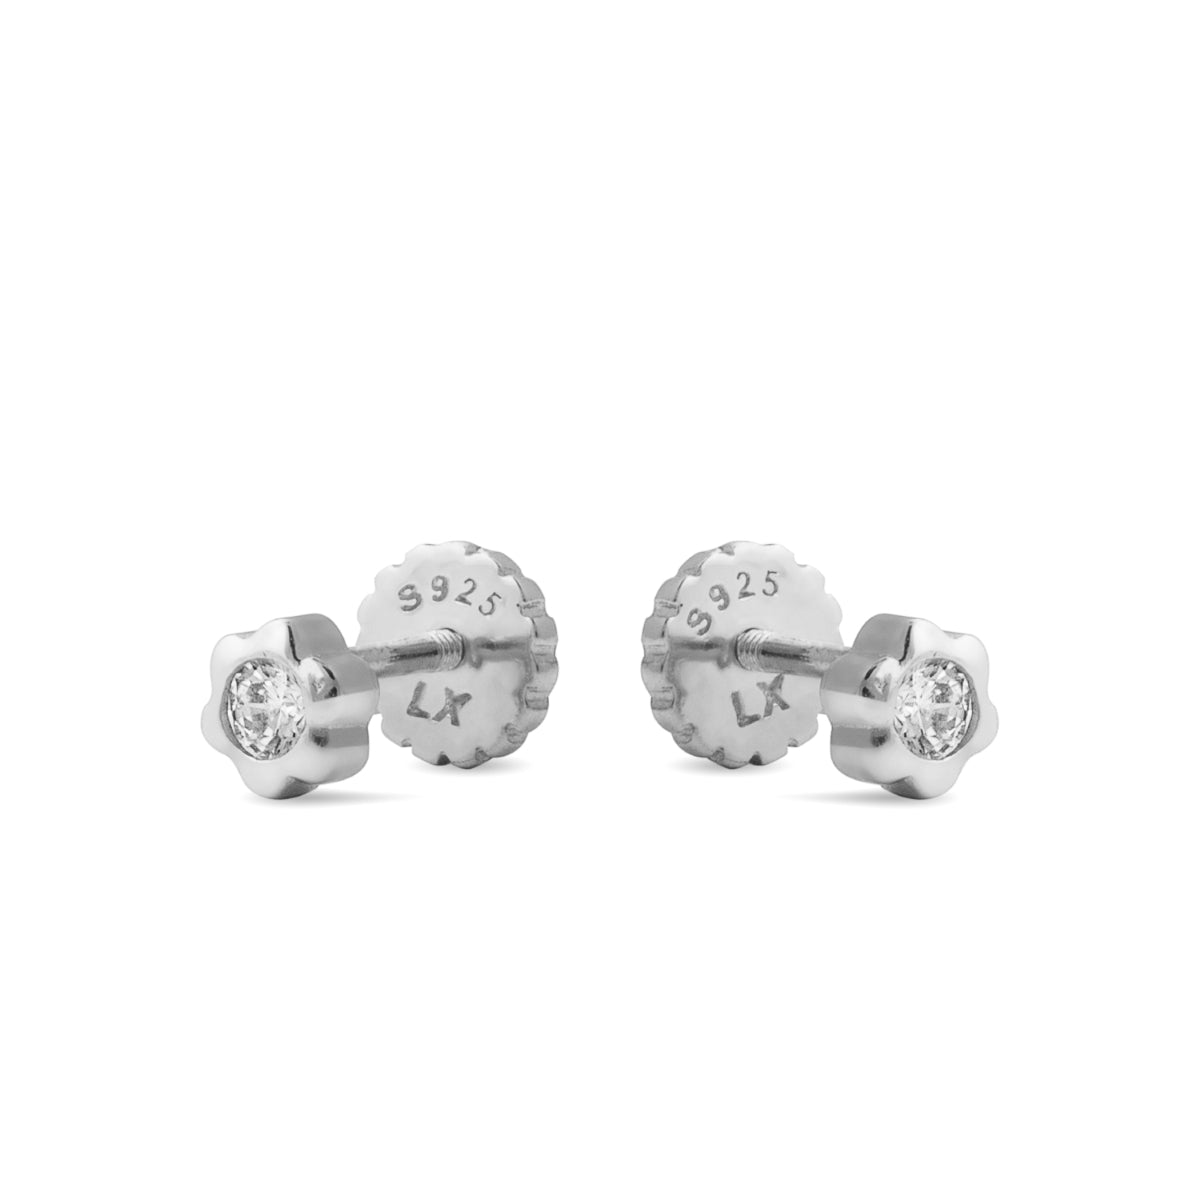 Kaiwu 925 Sterling Silver Earrings